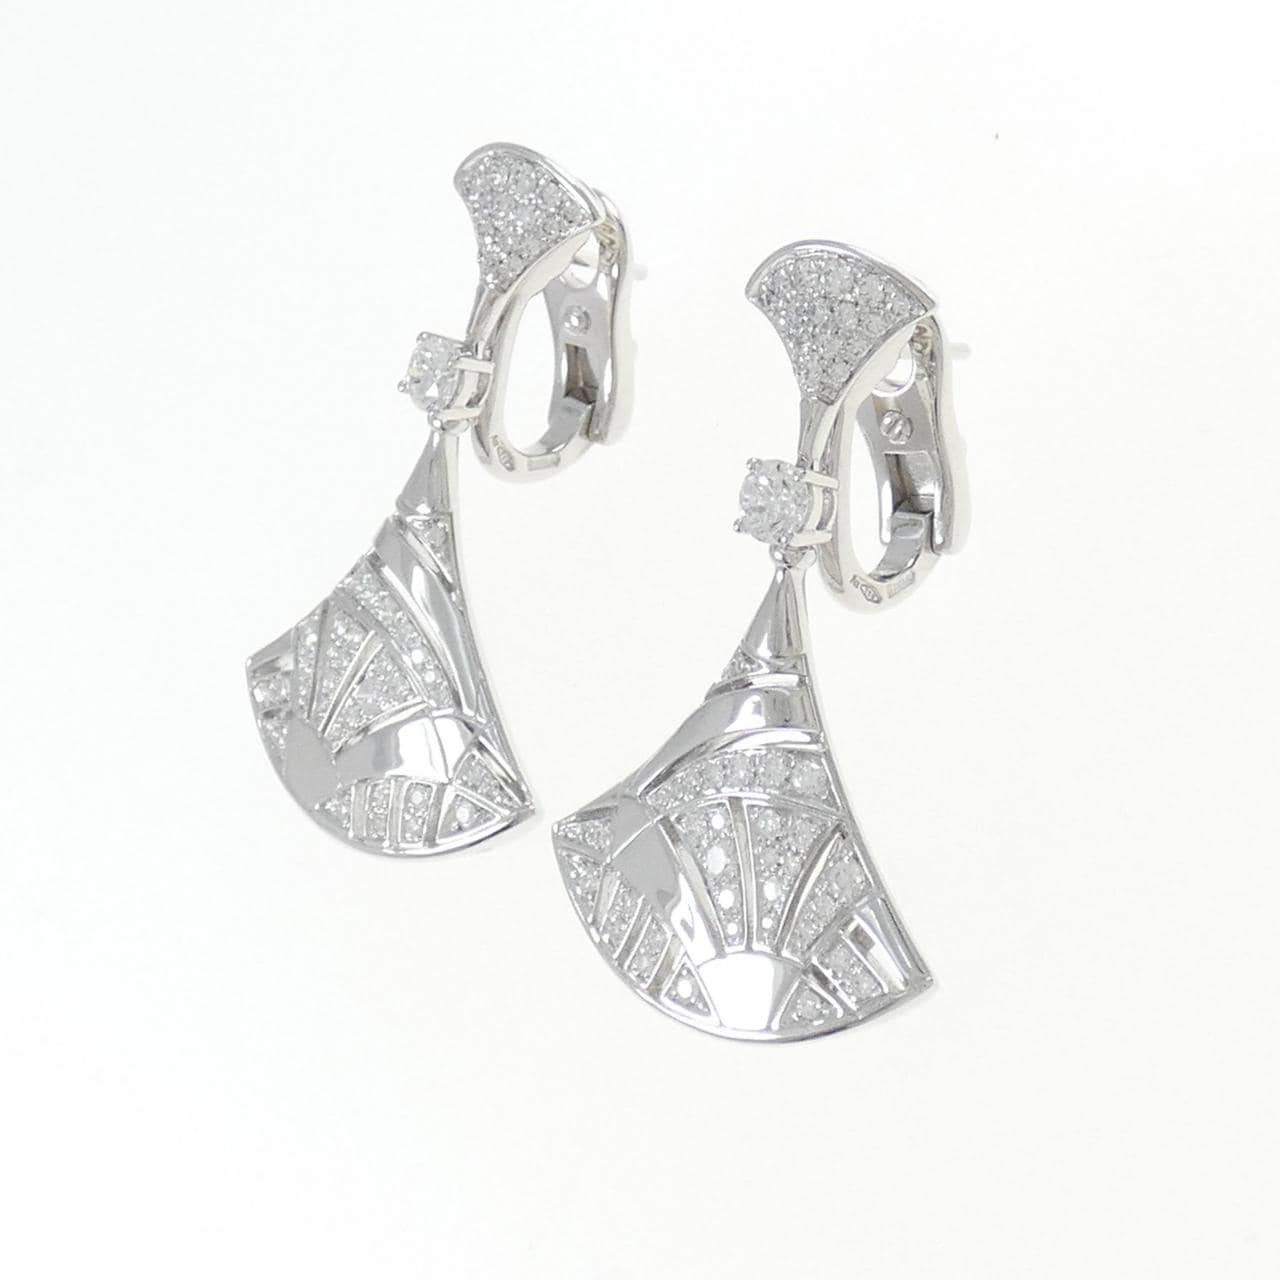 BVLGARI diva dream earrings